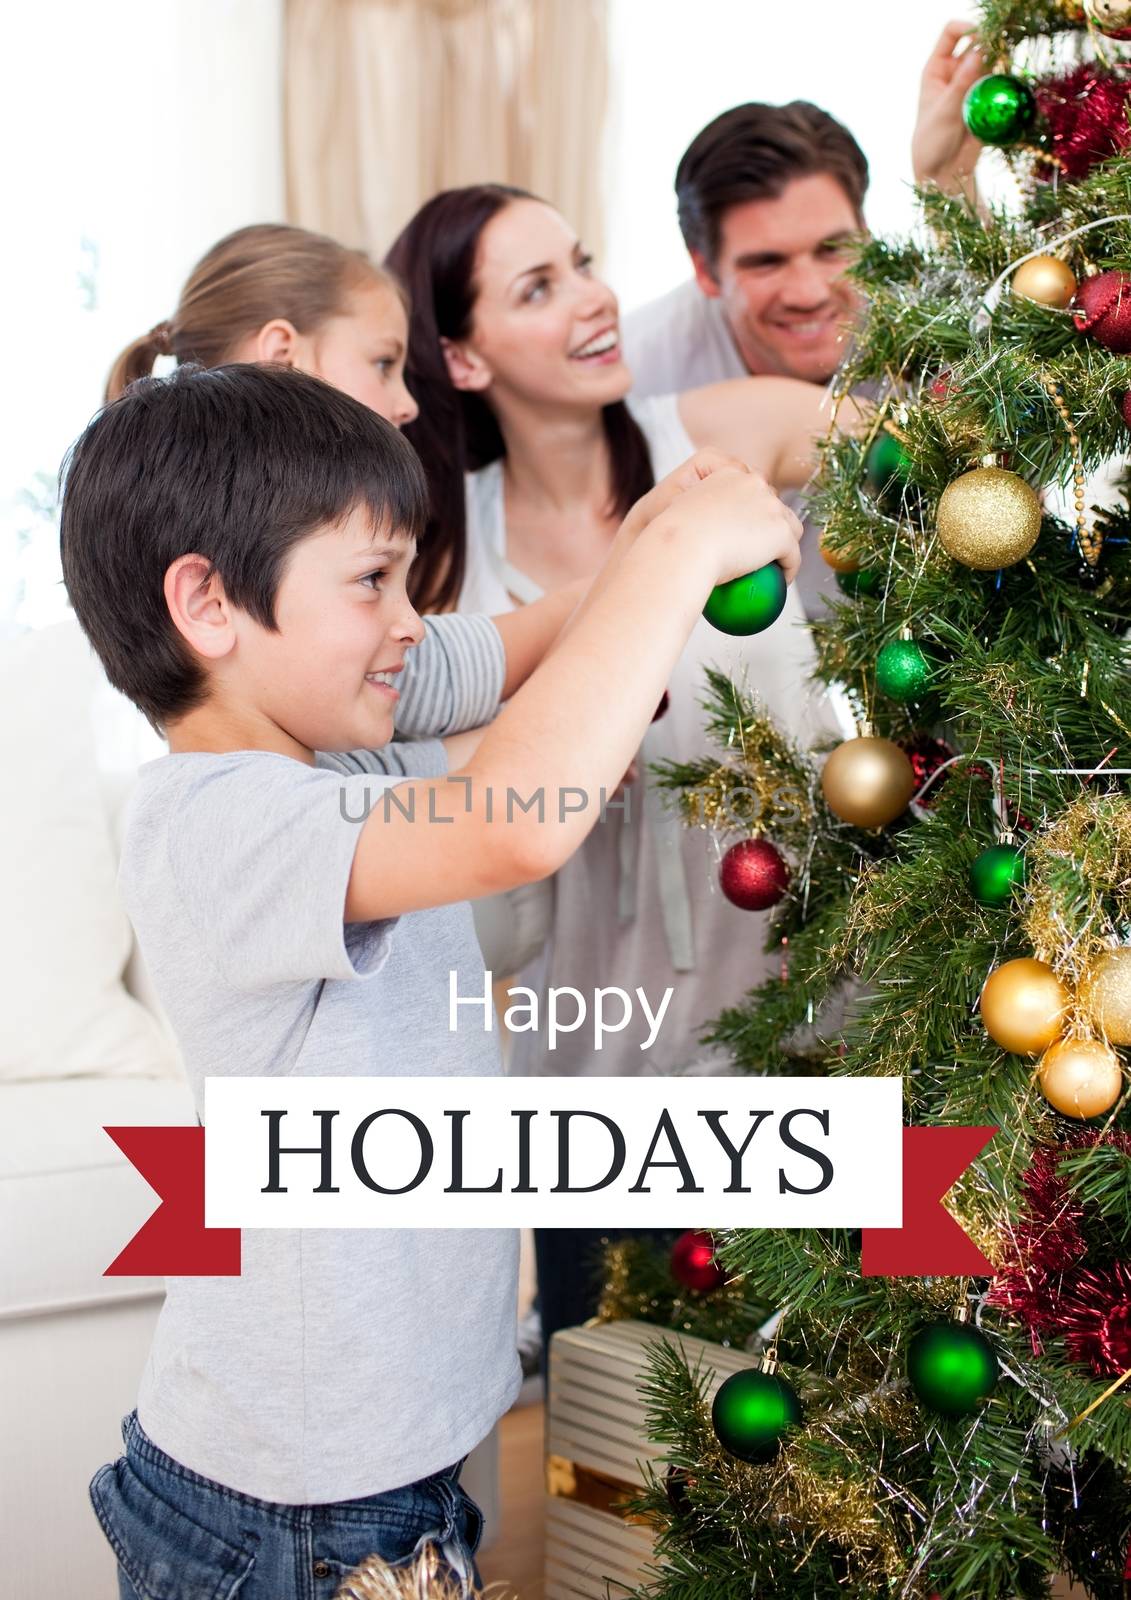 Happy Holidays text with family decorating tree by Wavebreakmedia